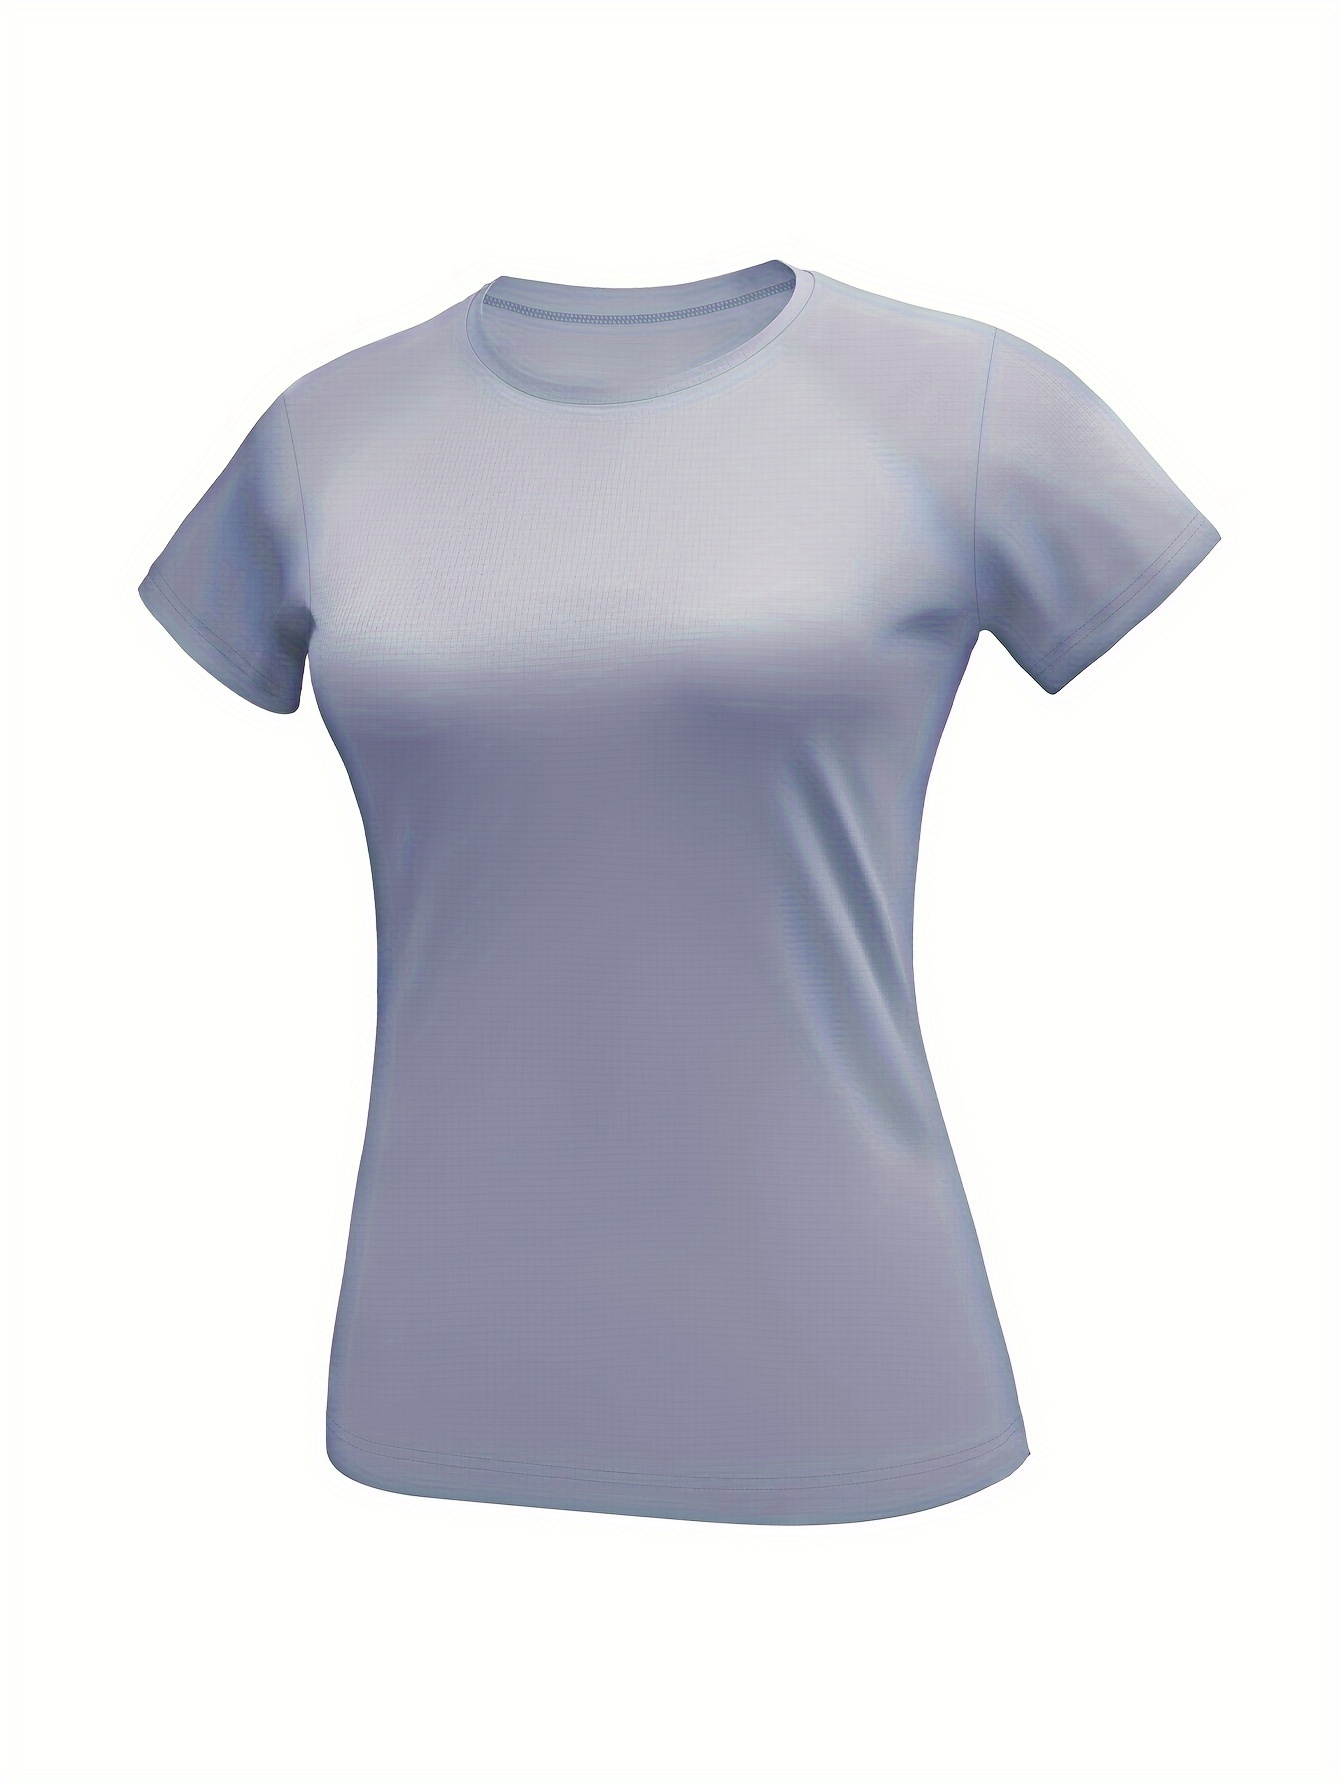  Camisetas deportivas para mujer, camiseta de manga T